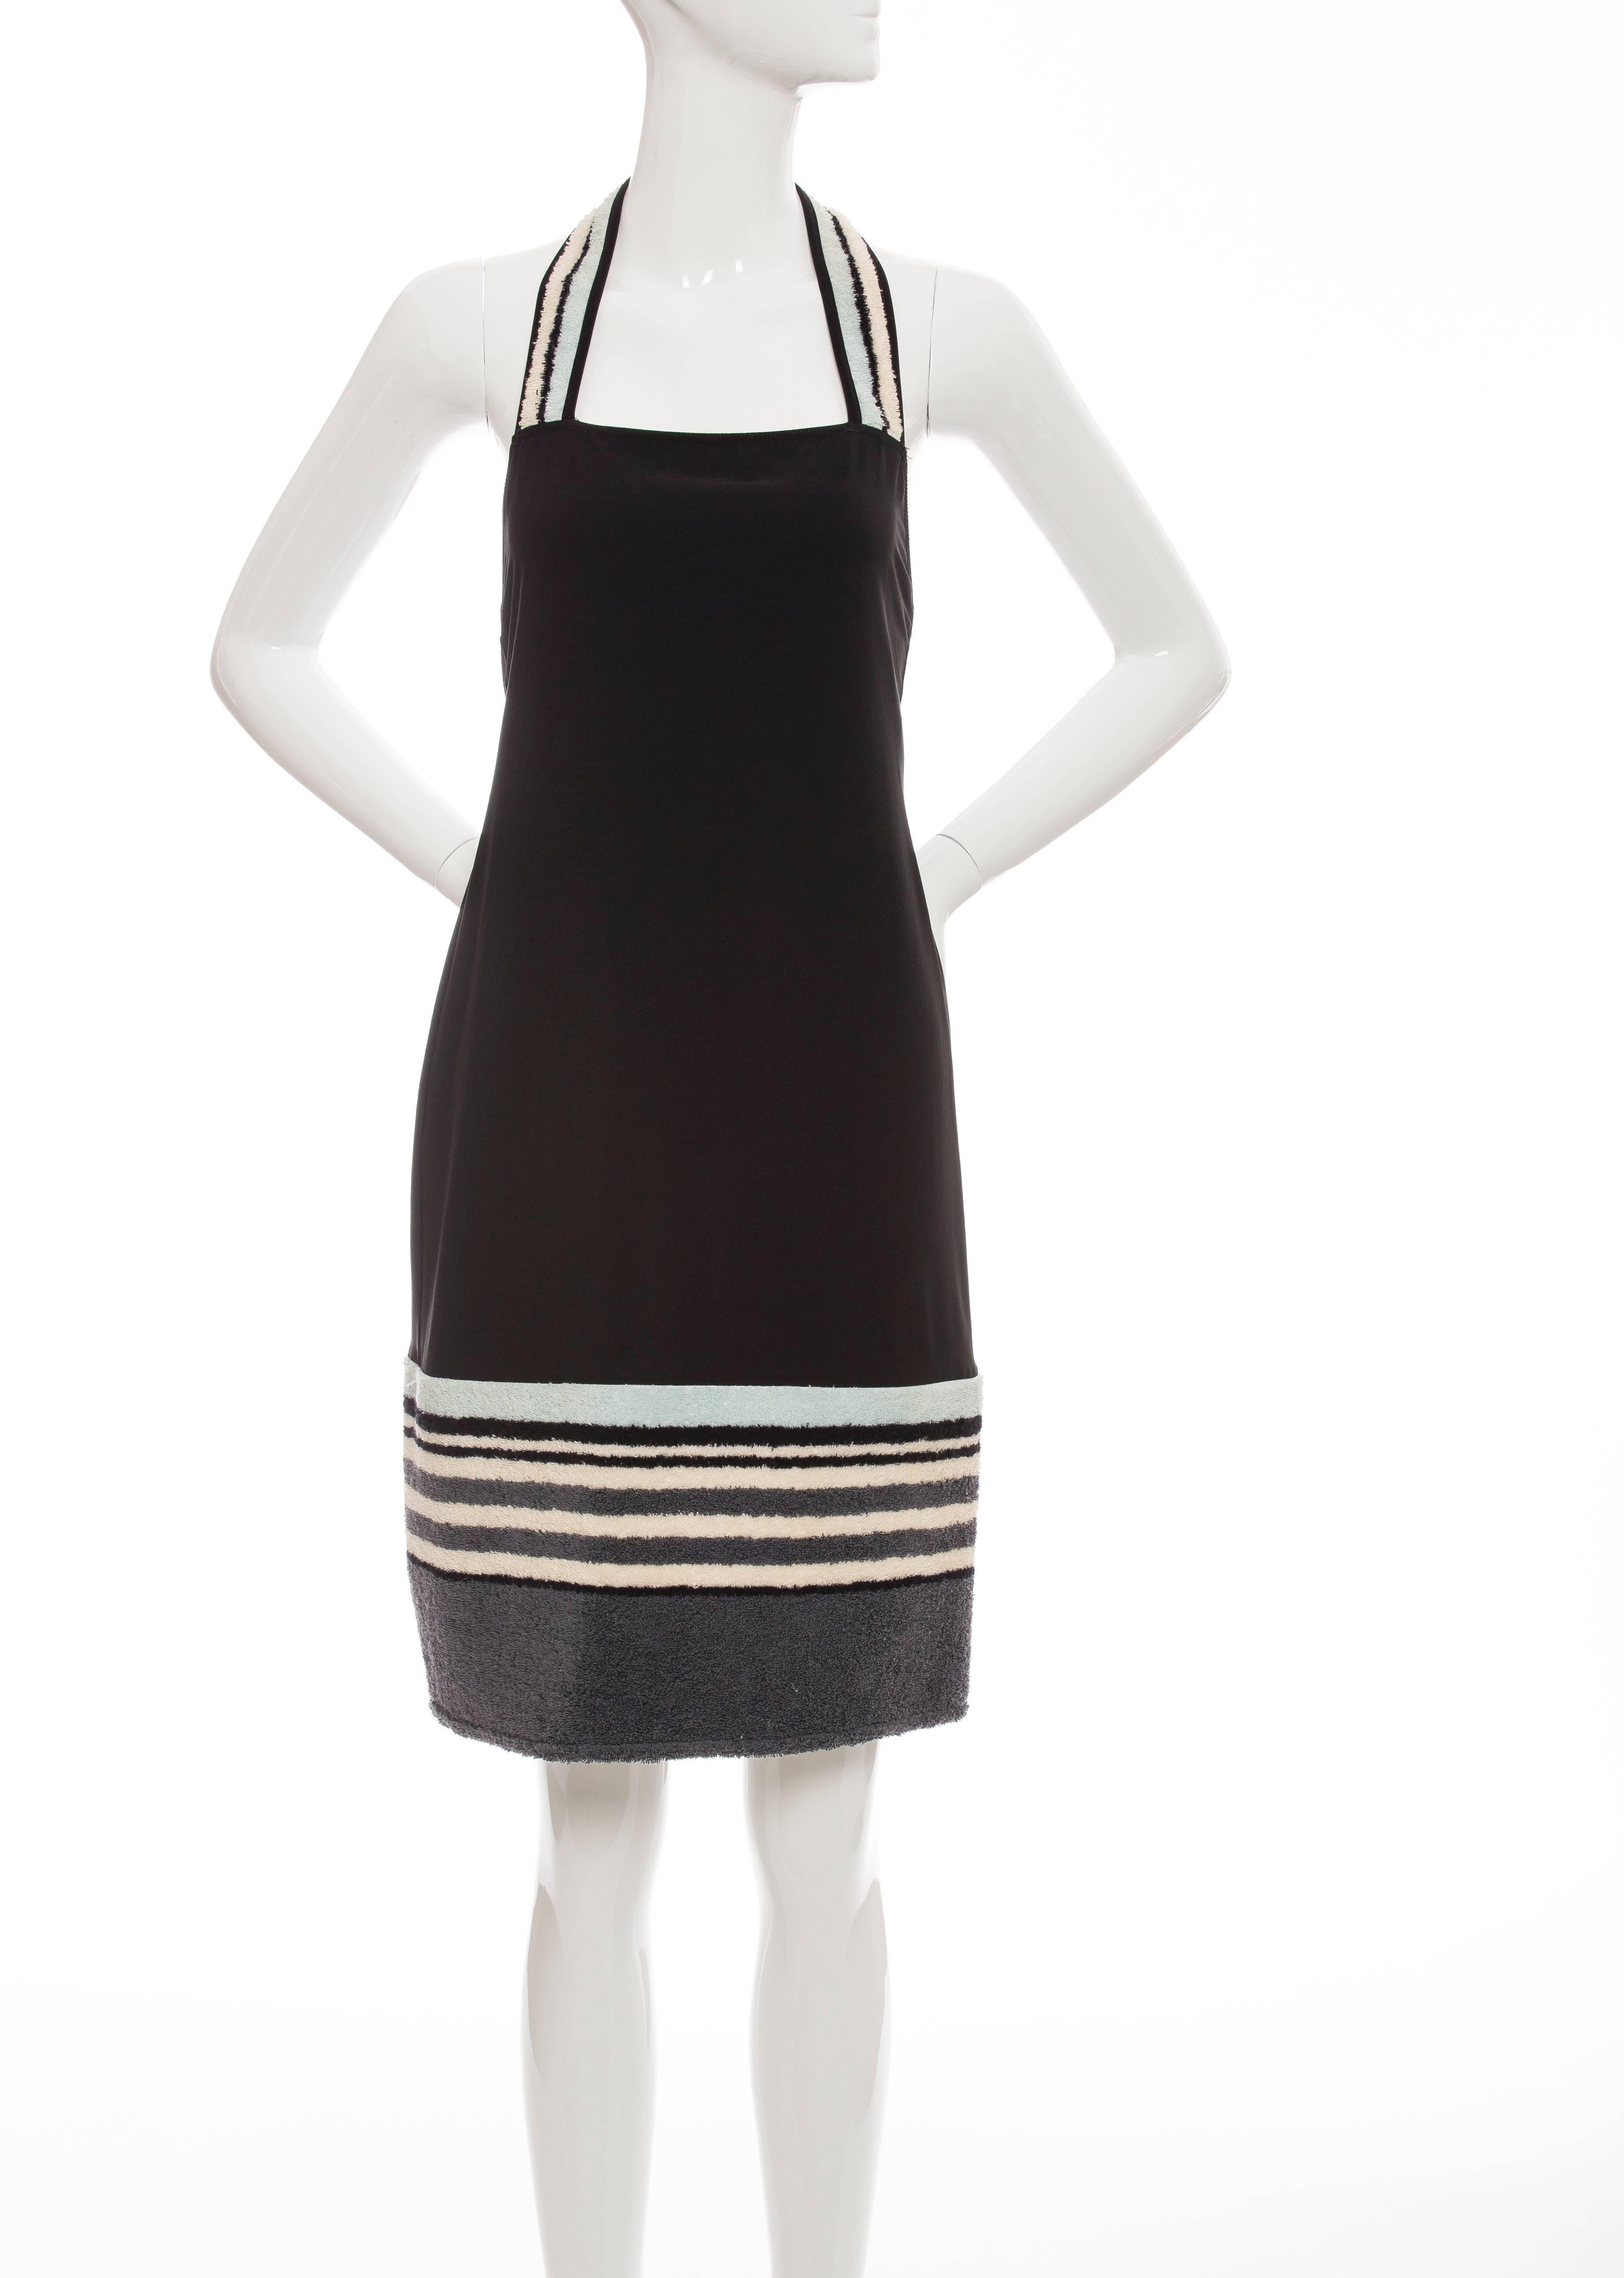 Chanel, Cruise 2000 black halter-dress with striped terrycloth trim.

EU. 38